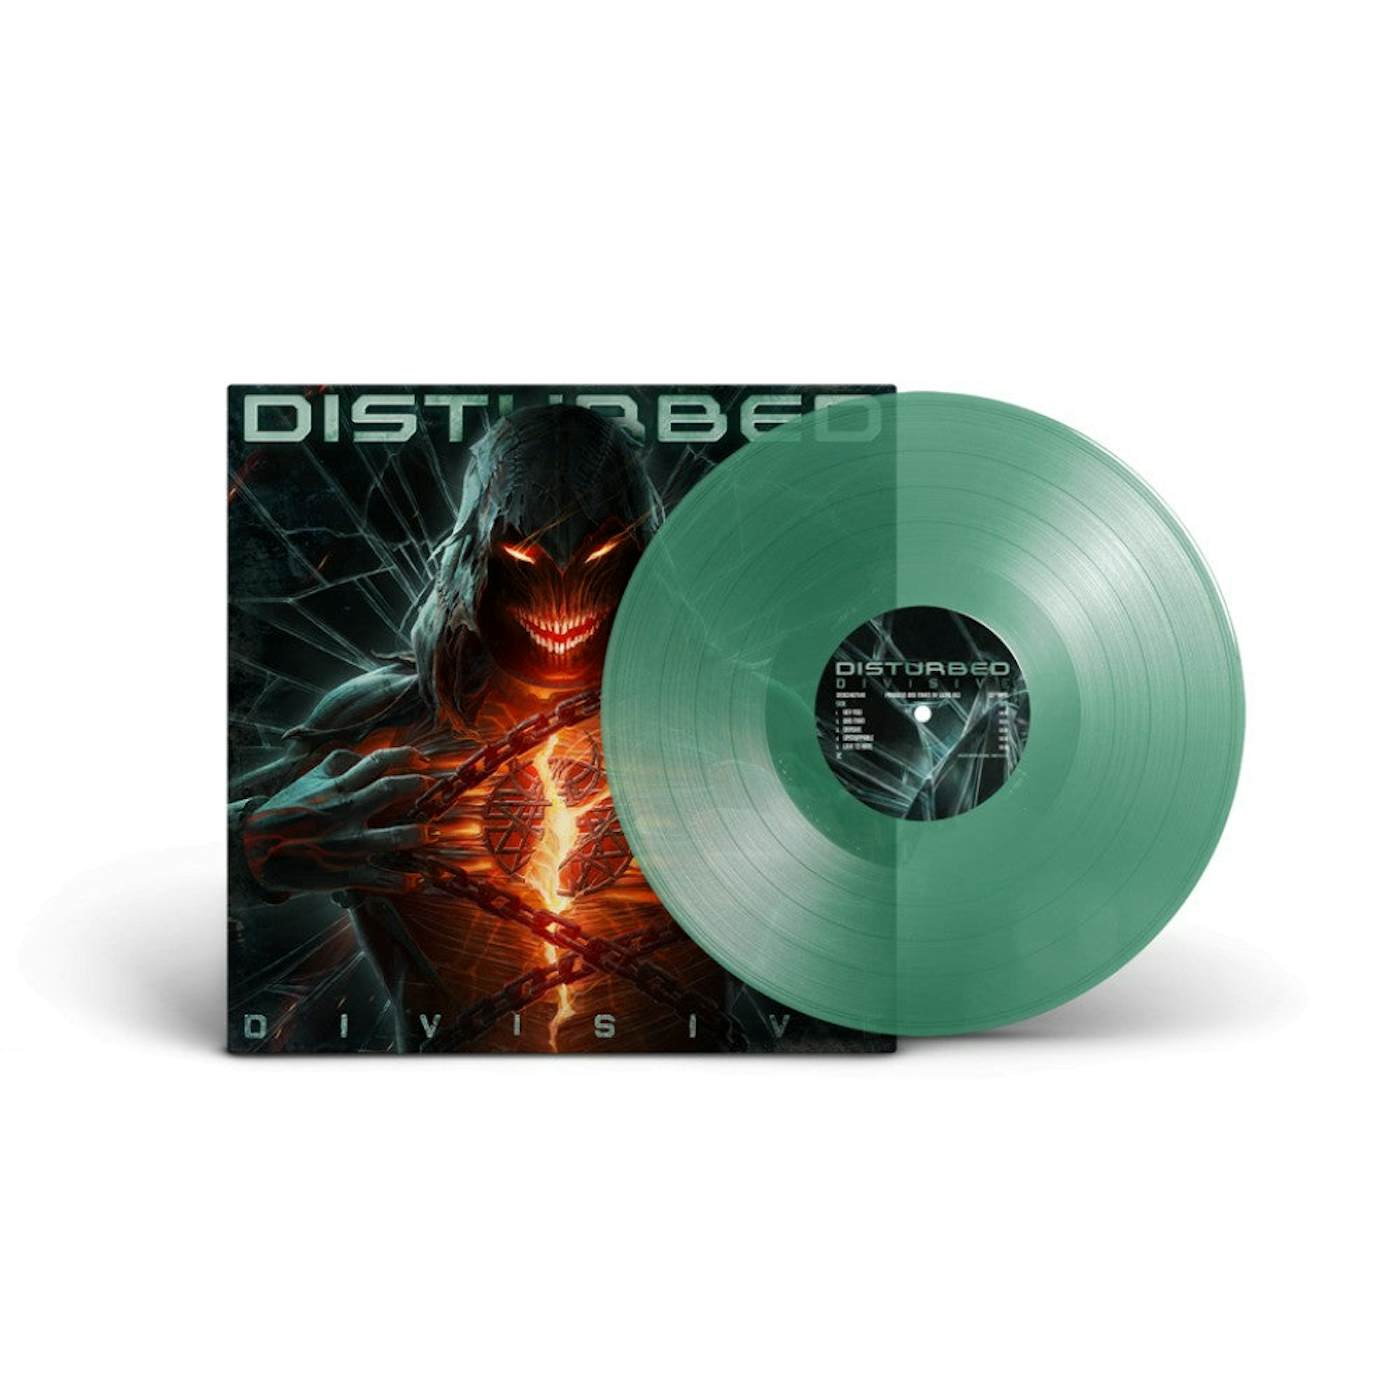 Disturbed Divisive Spotify Fans First Green Vinyl LP